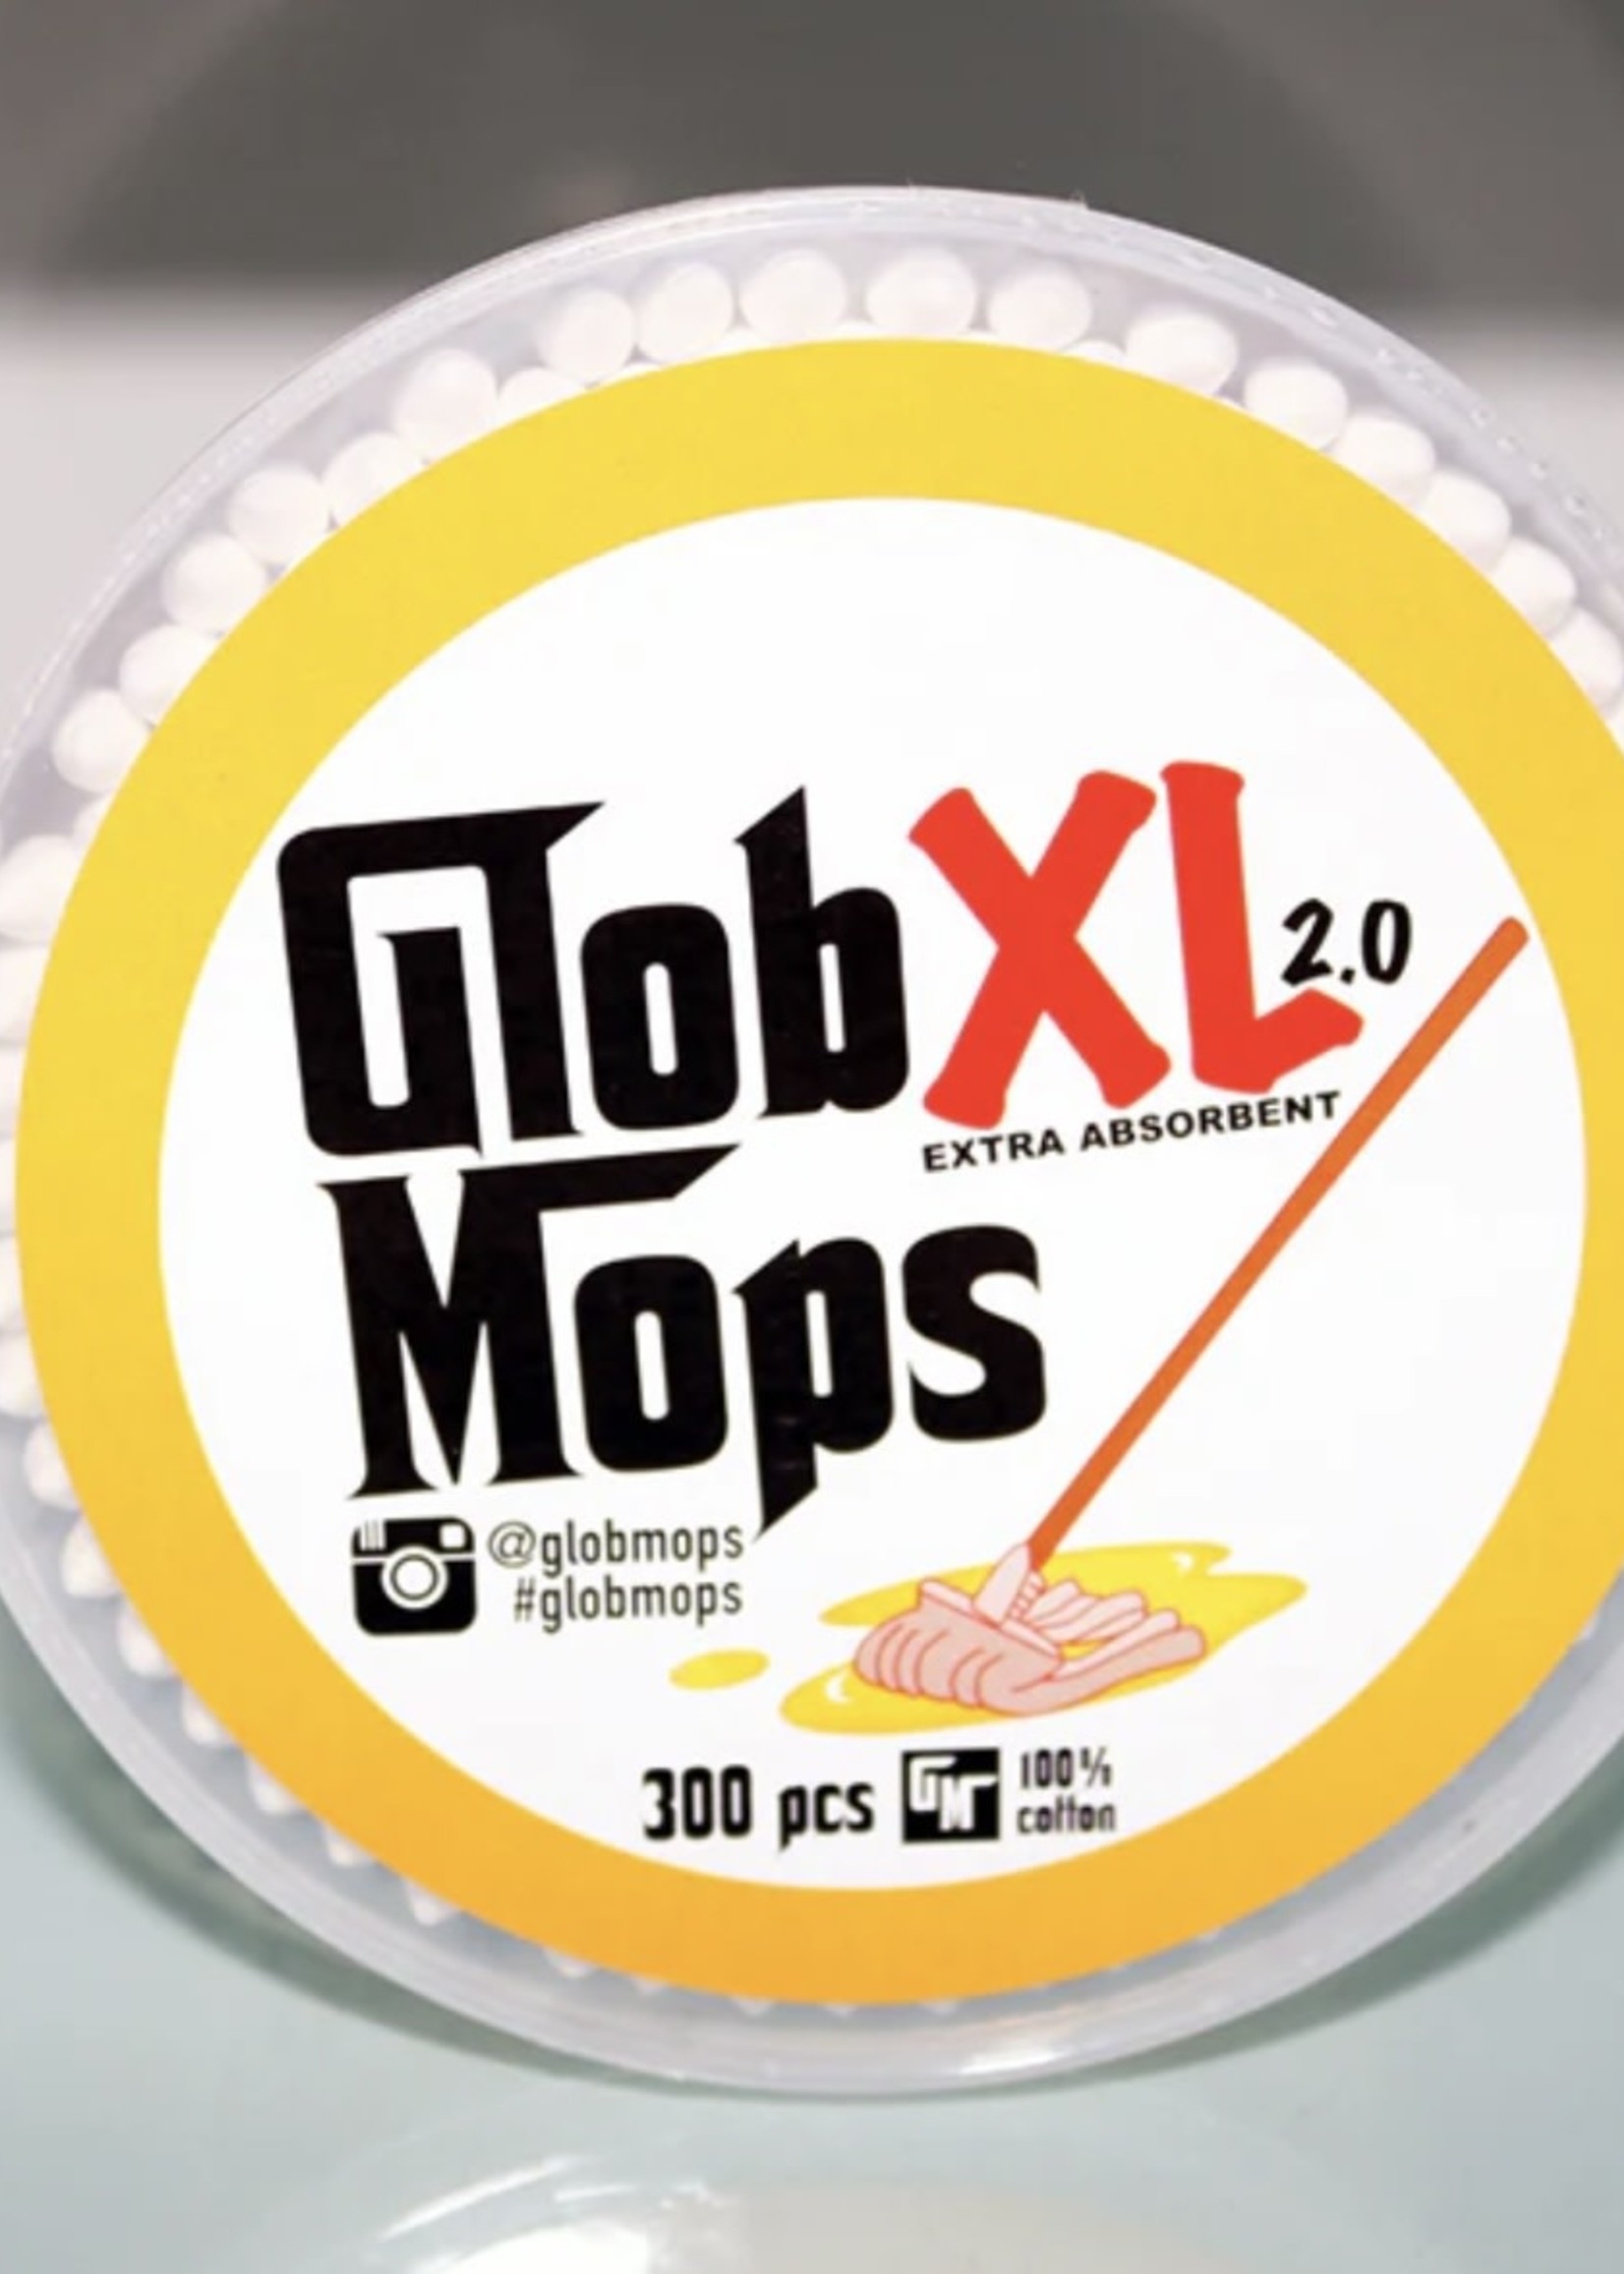 GLOB MOPS GLOB MOPS XL 2.0